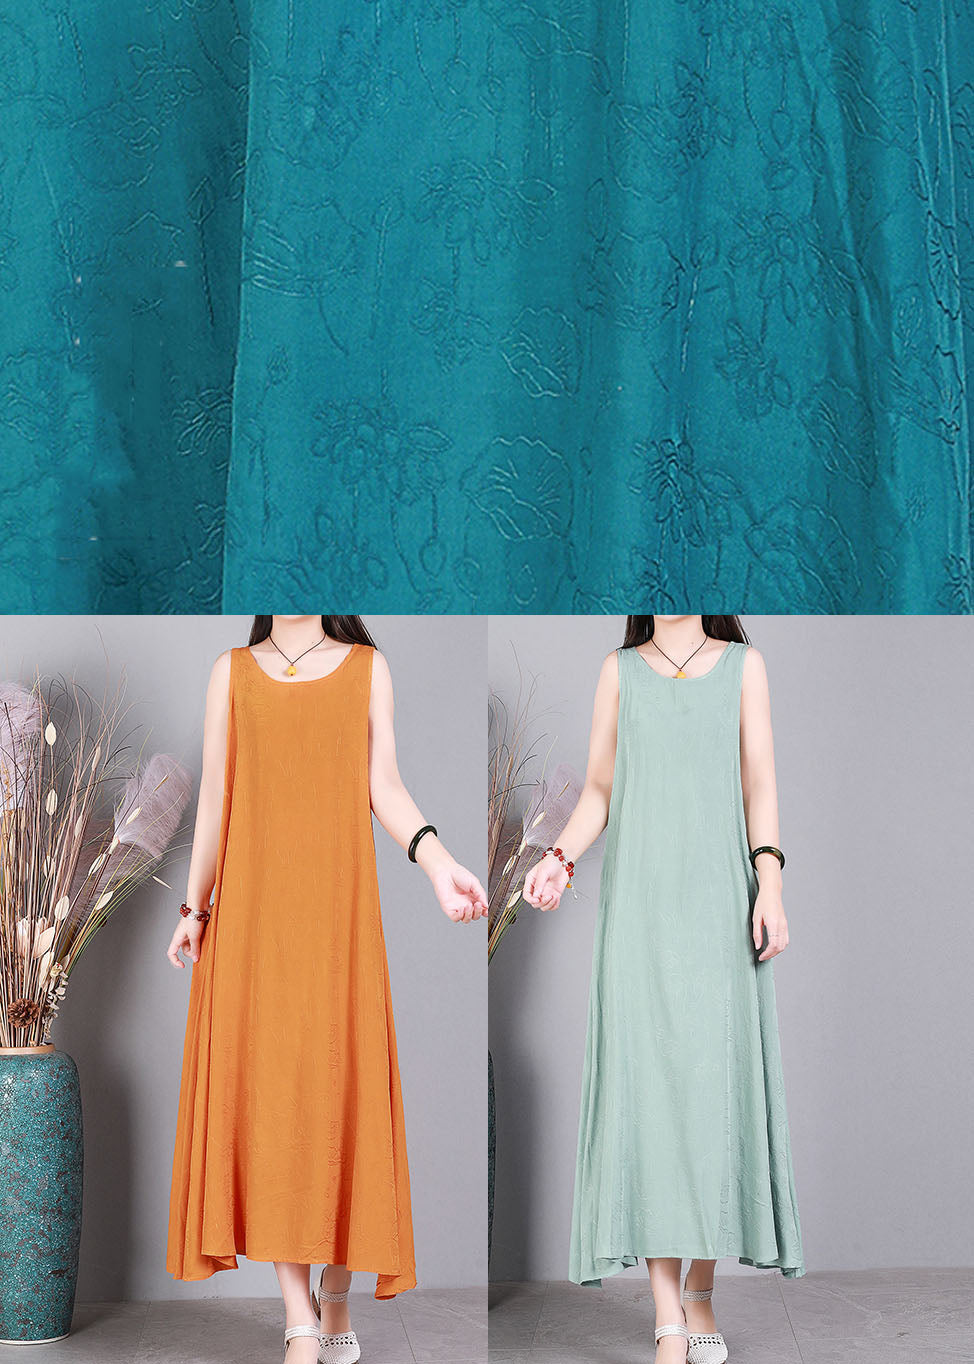 Modern Blue O-Neck Jacquard Linen Party Strap Dress Sleeveless